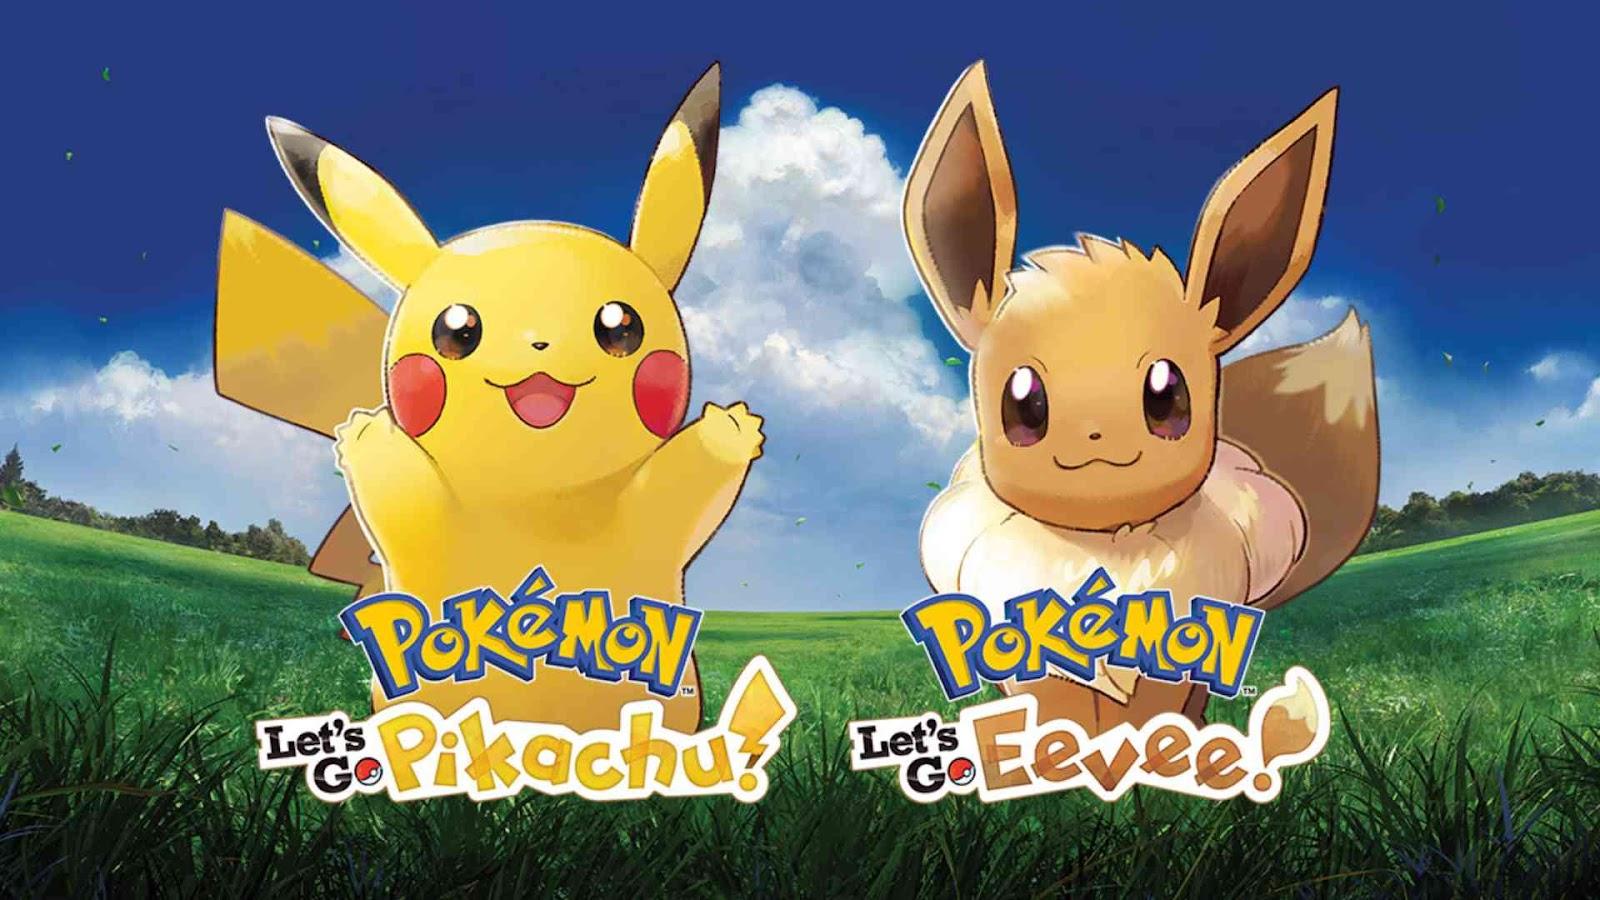 13.Pokémon: Let's Go, Pikachu! and Let's Go, Eevee!